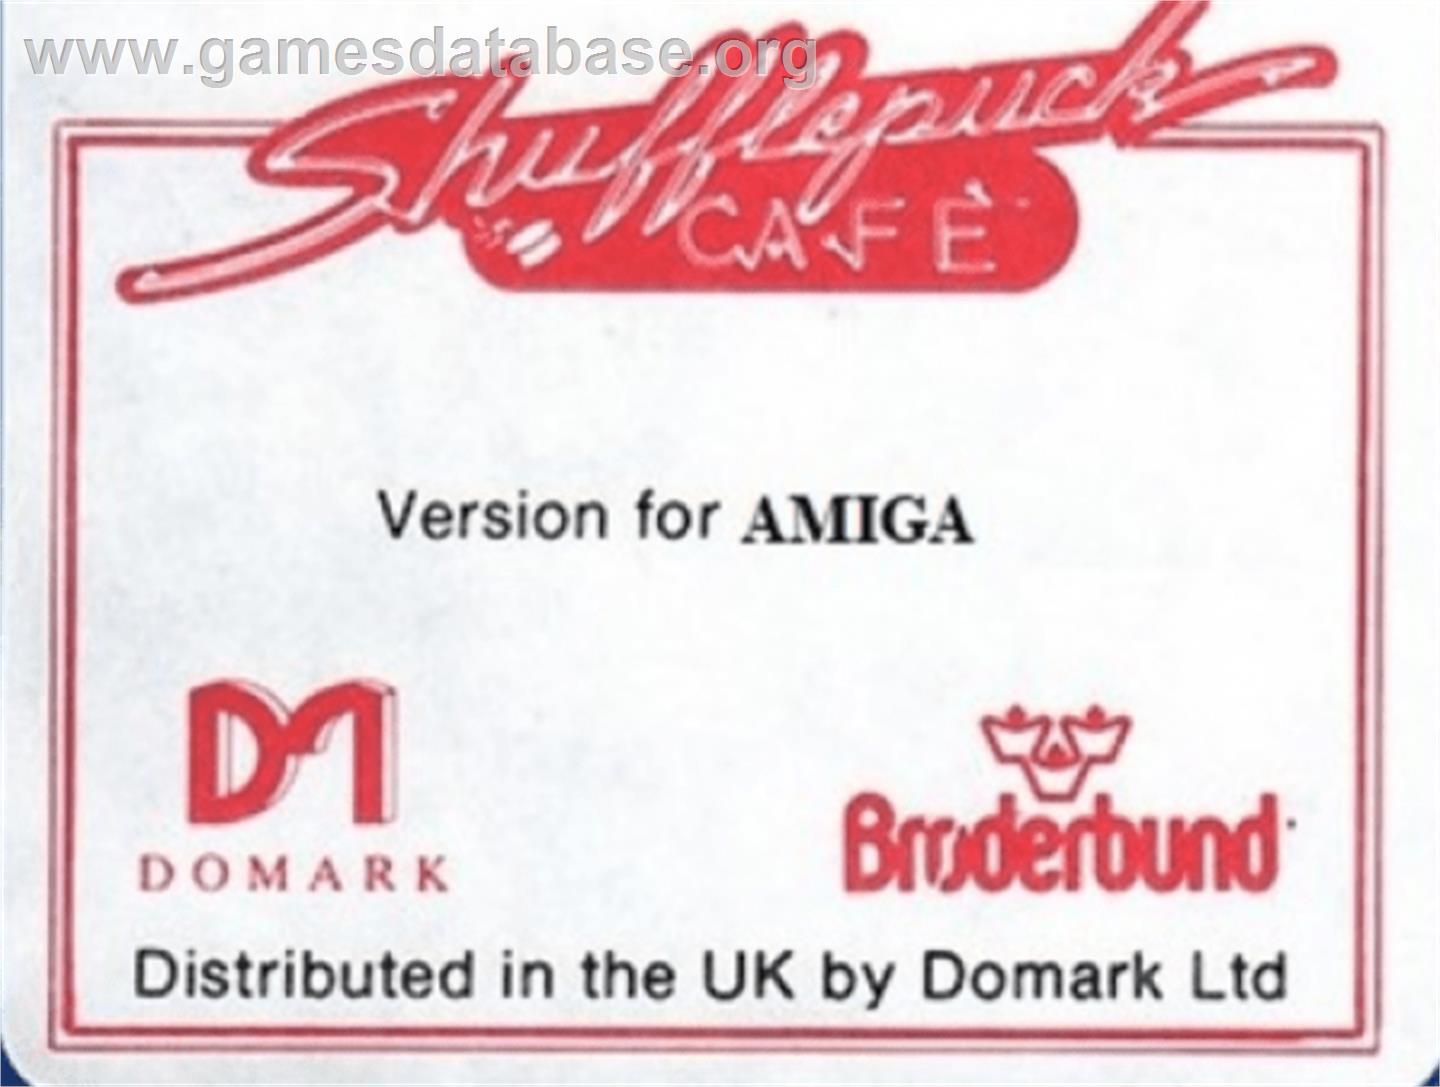 Shufflepuck Cafe - Commodore Amiga - Artwork - Cartridge Top